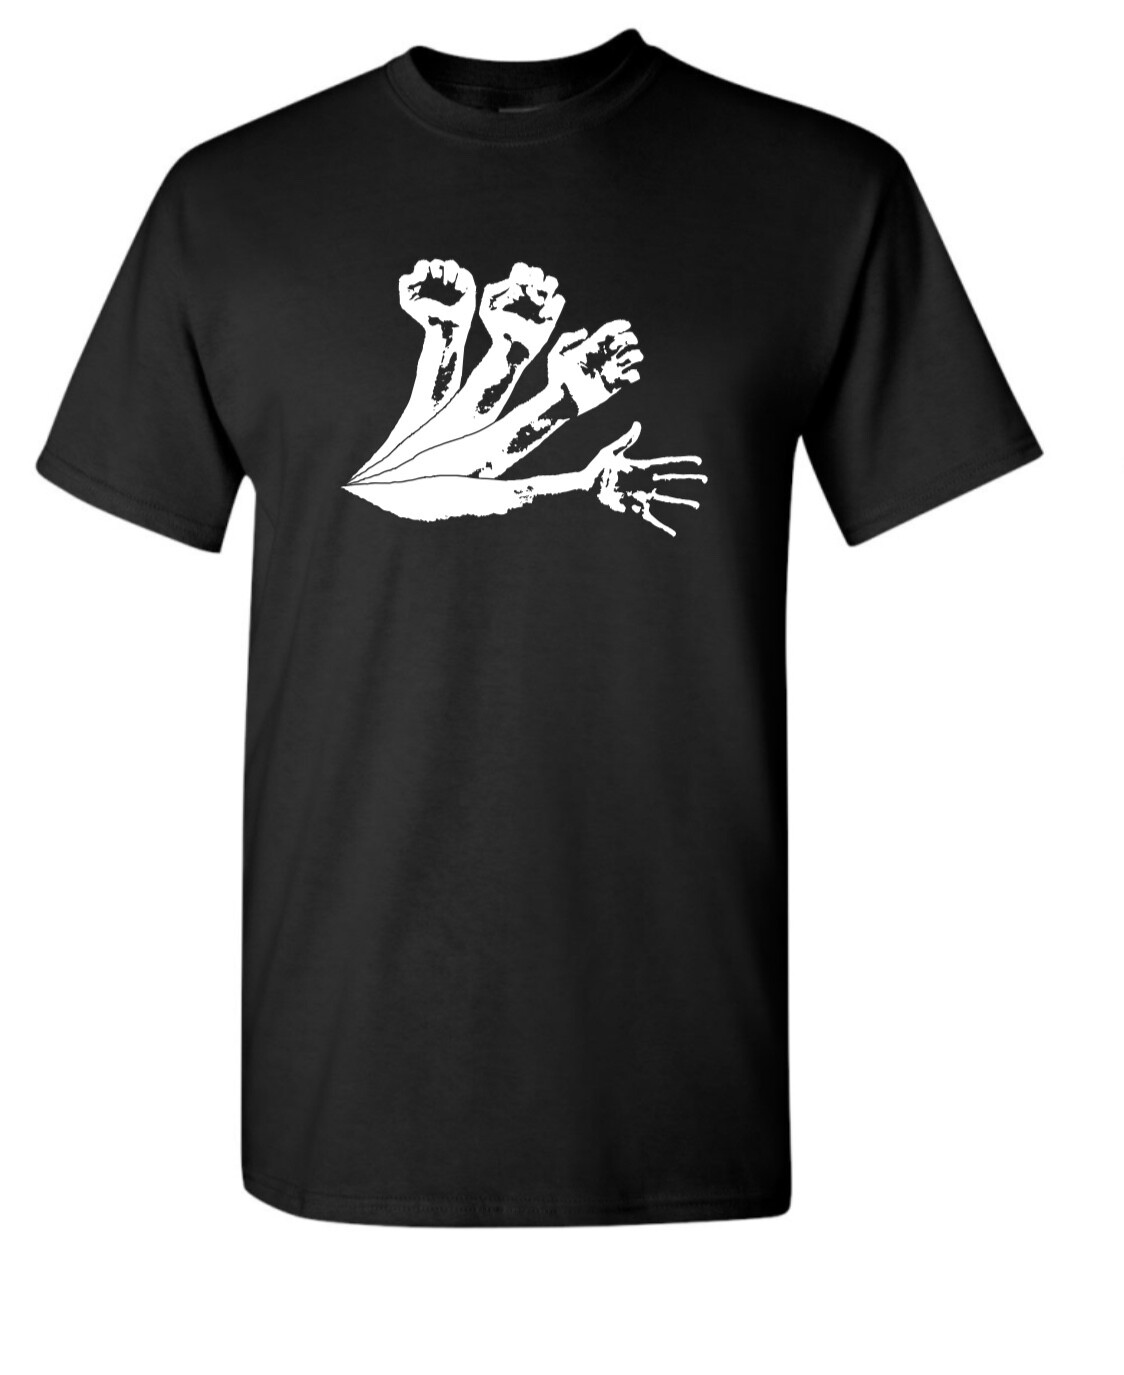 ASL Slam Black Shirt with White Logo